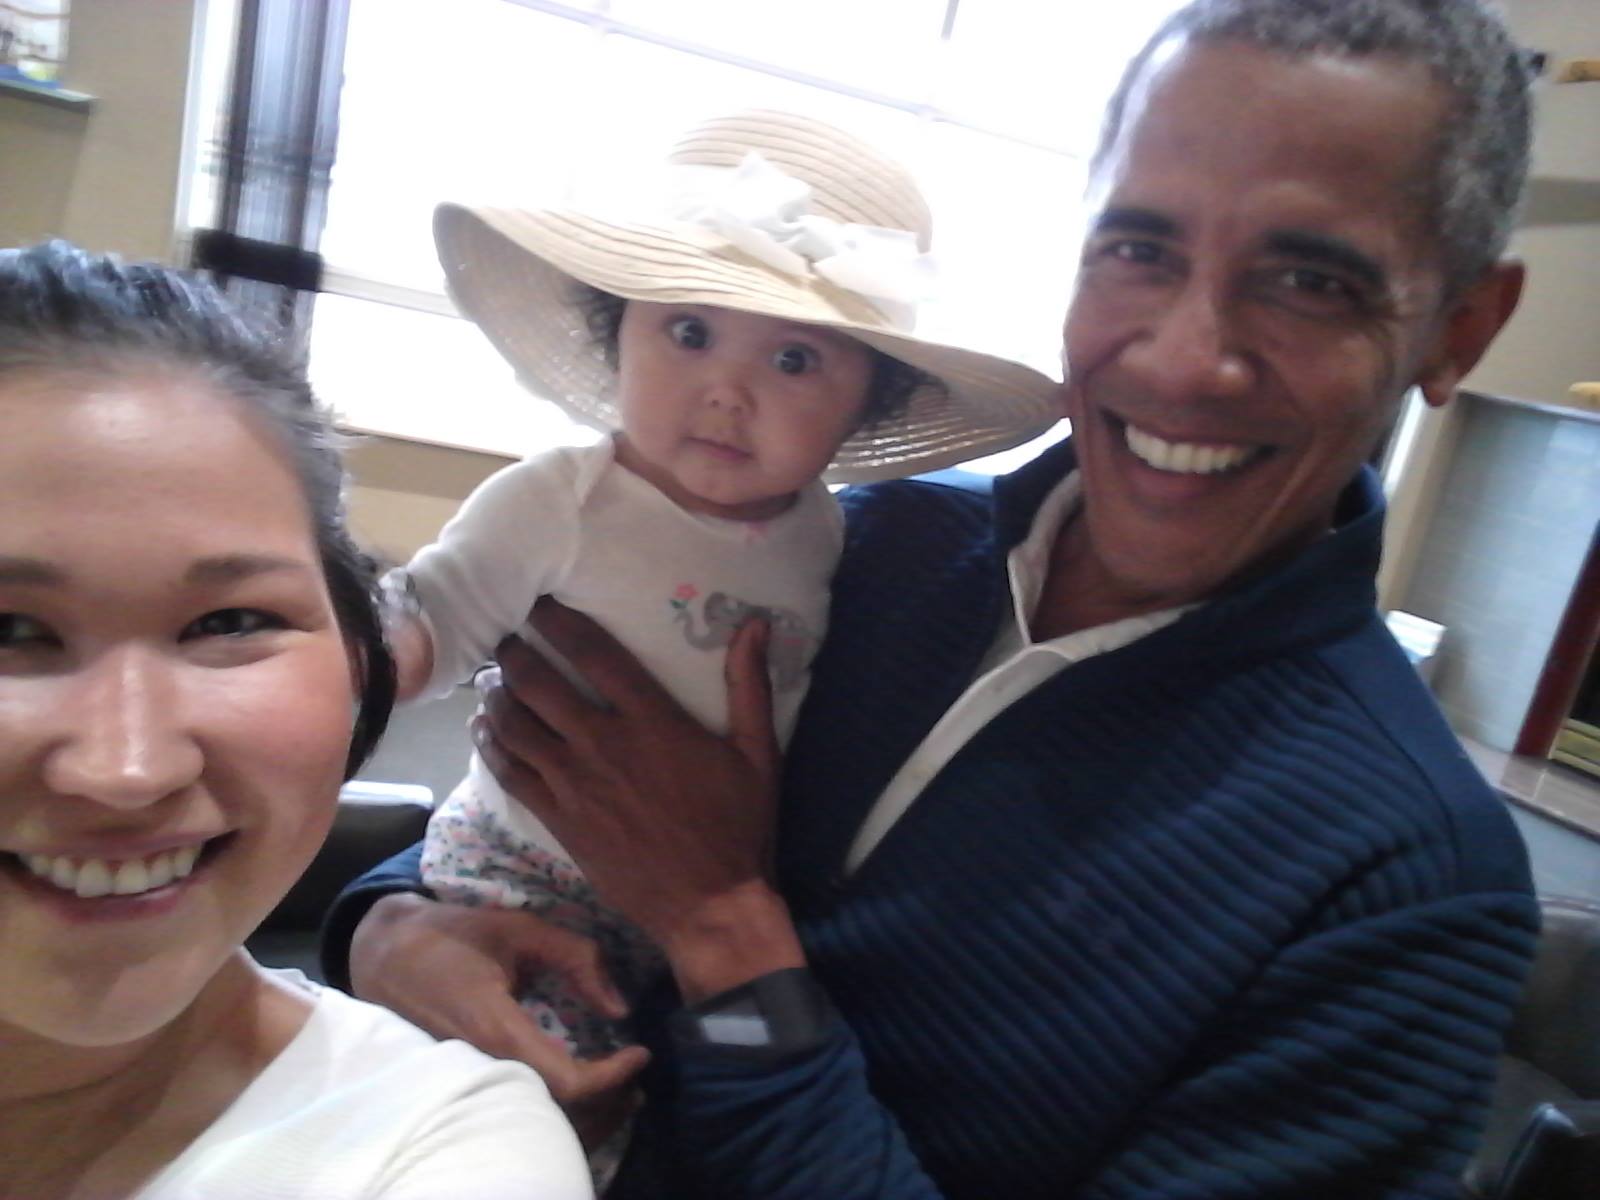 Barack Obama Takes Baby Selfies With Alaskan Mom, Sets Internet Ablaze